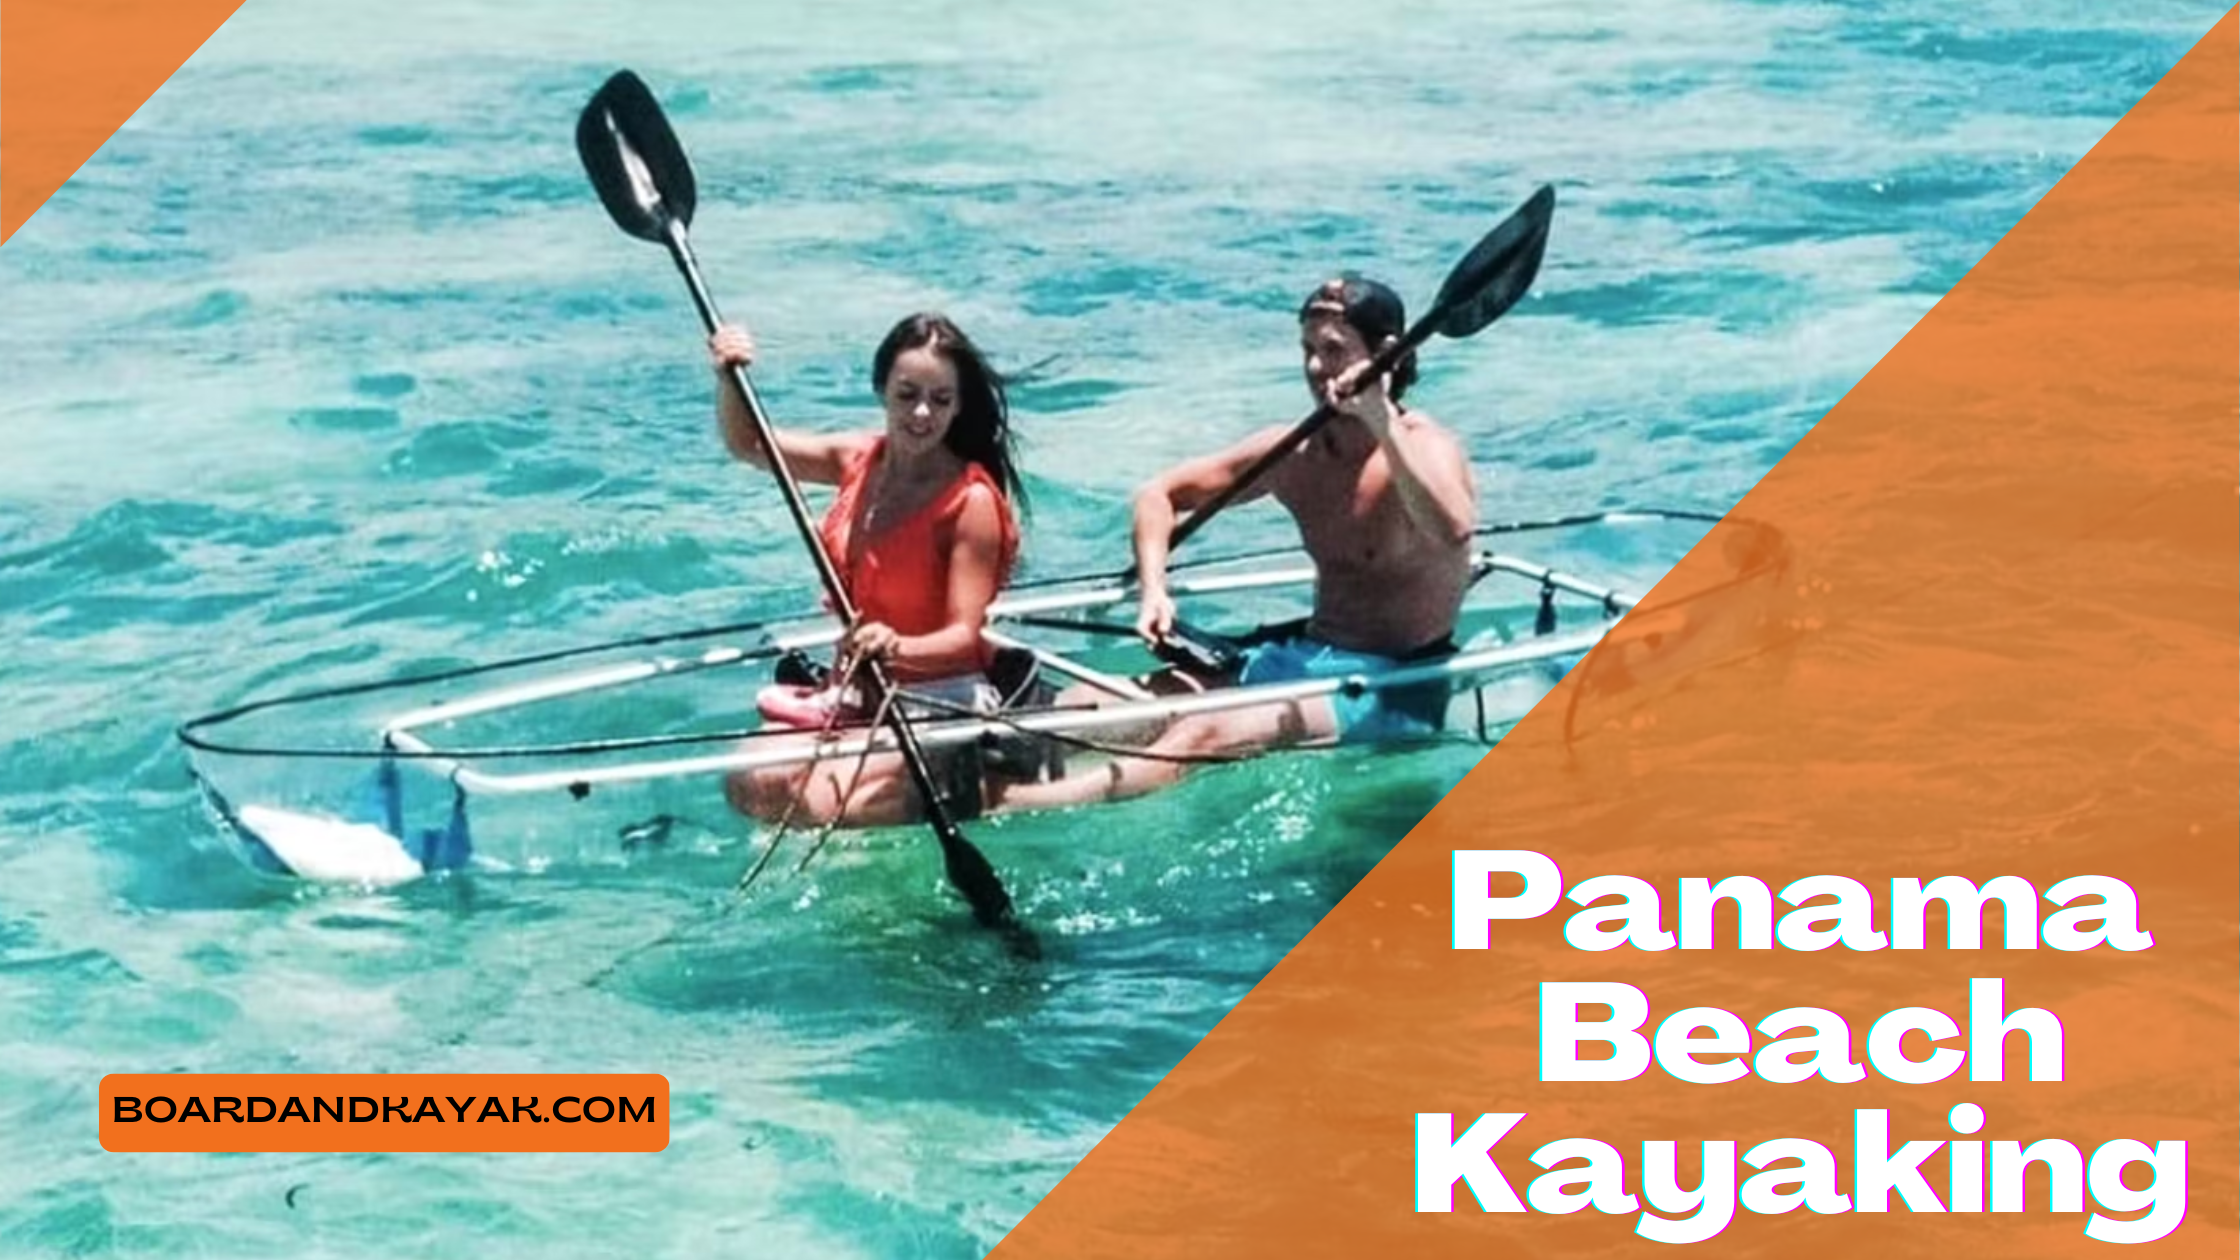 Panama Beach Kayaking